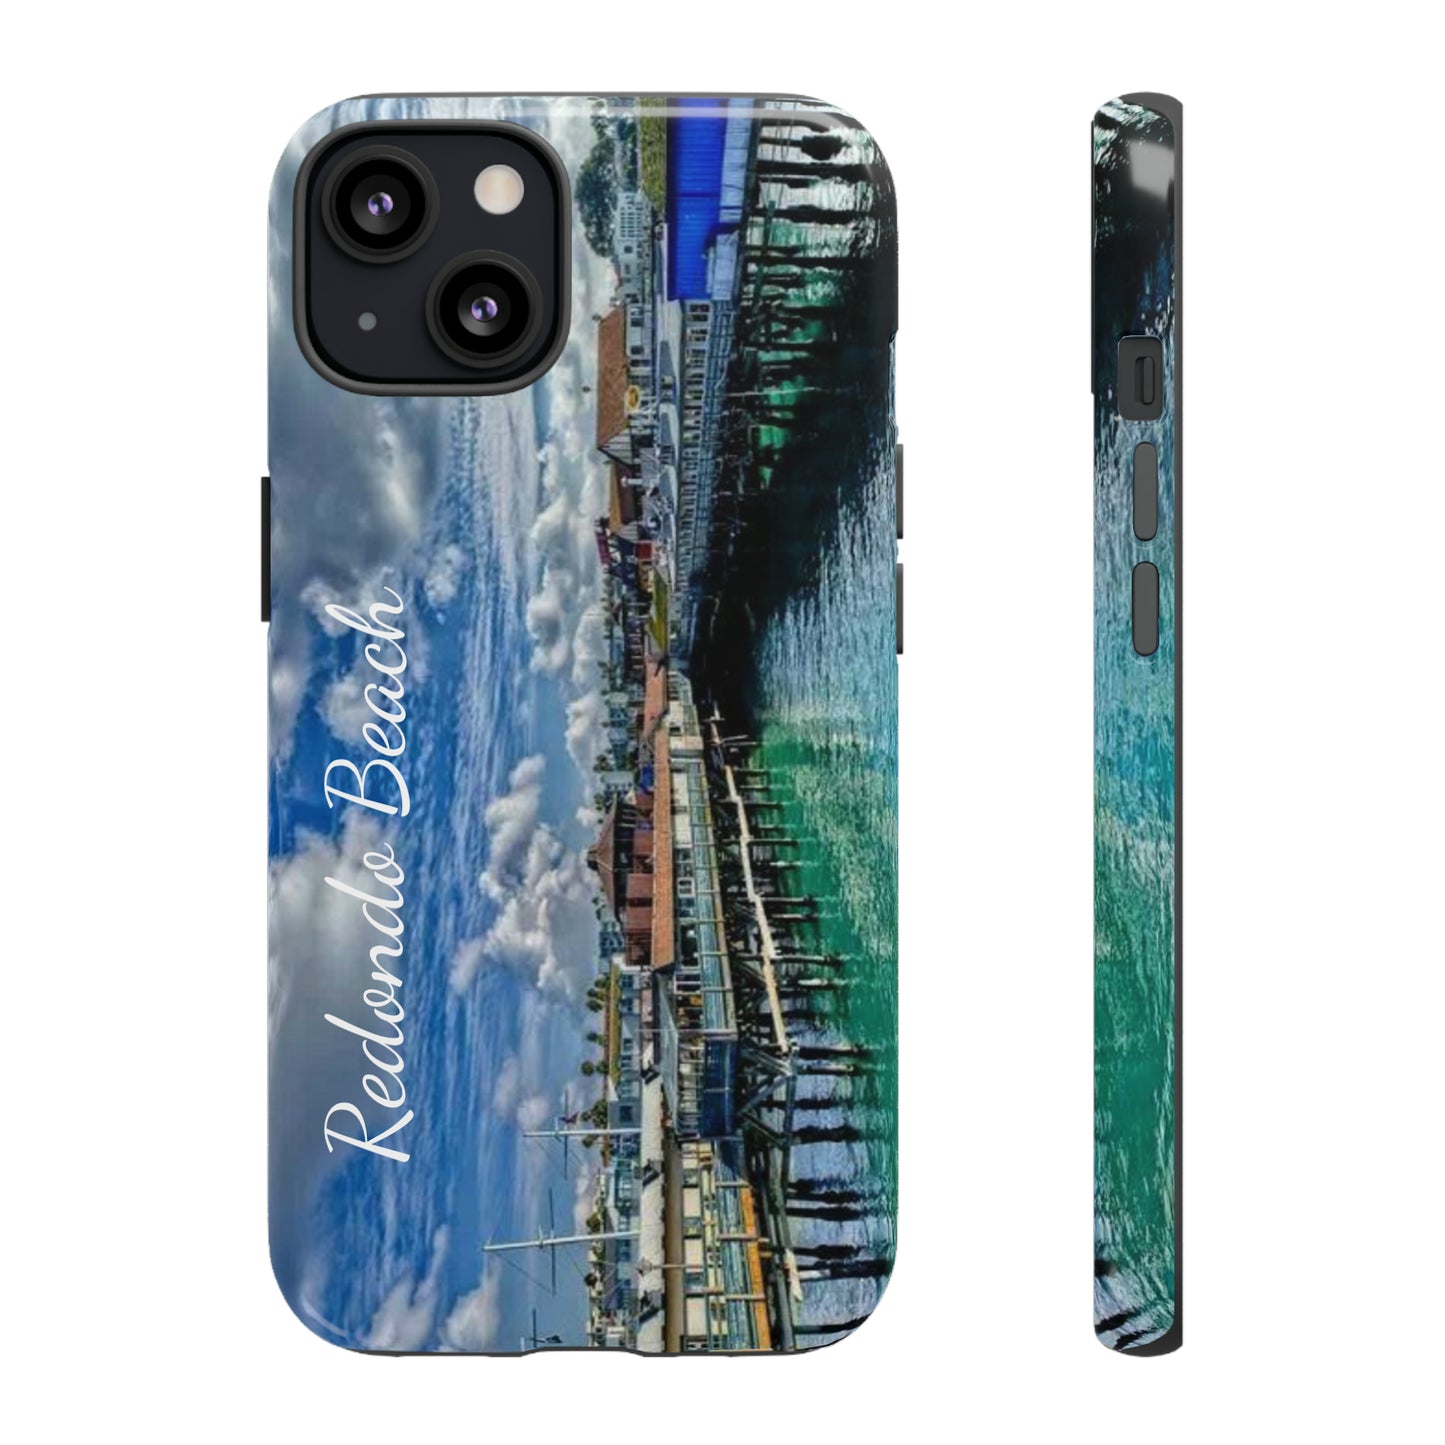 Redondo Beach California - All IPhone and Samsung Tough Cases